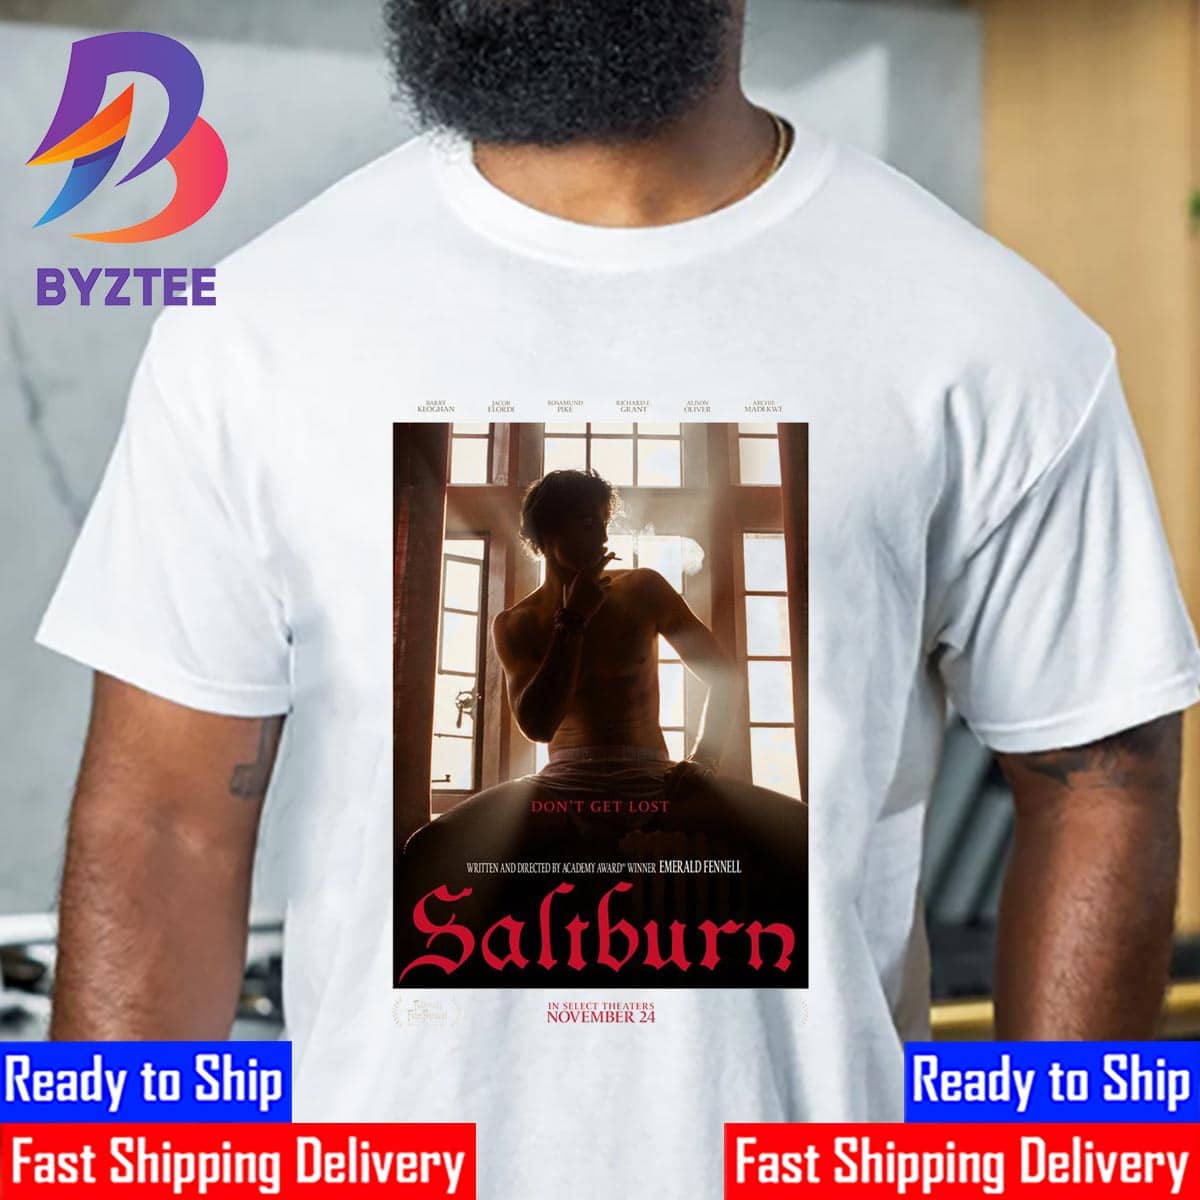 Saltburn, Official Site